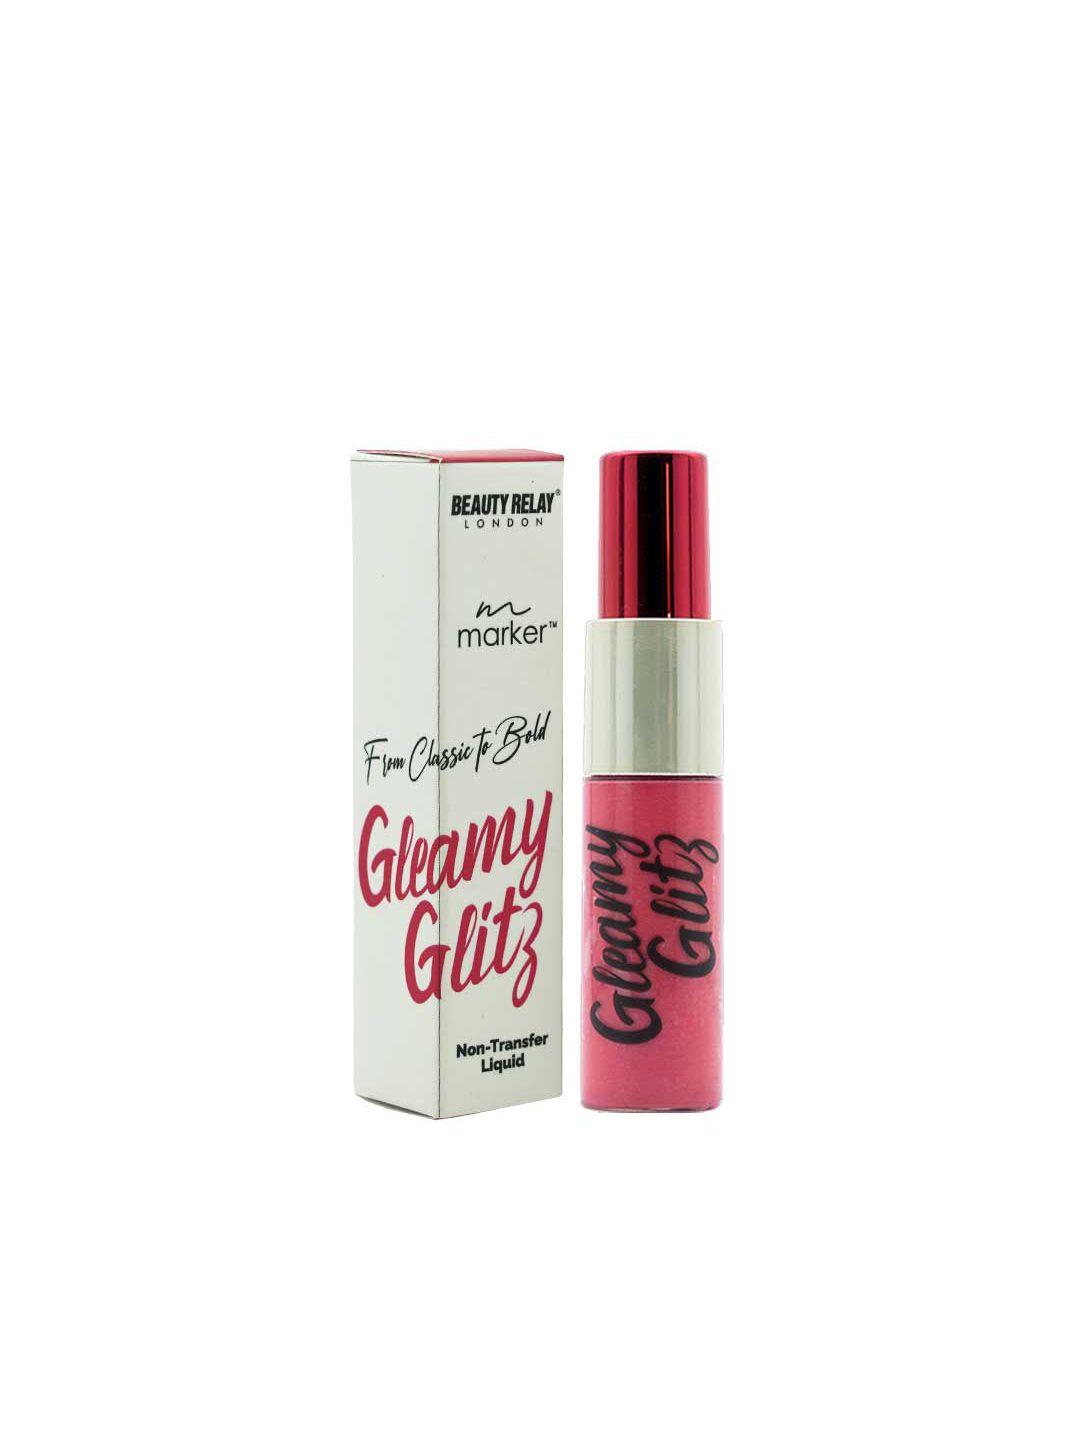 beautyrelay london gleamy glitz from classic to bold lipstick 10g-summer haze